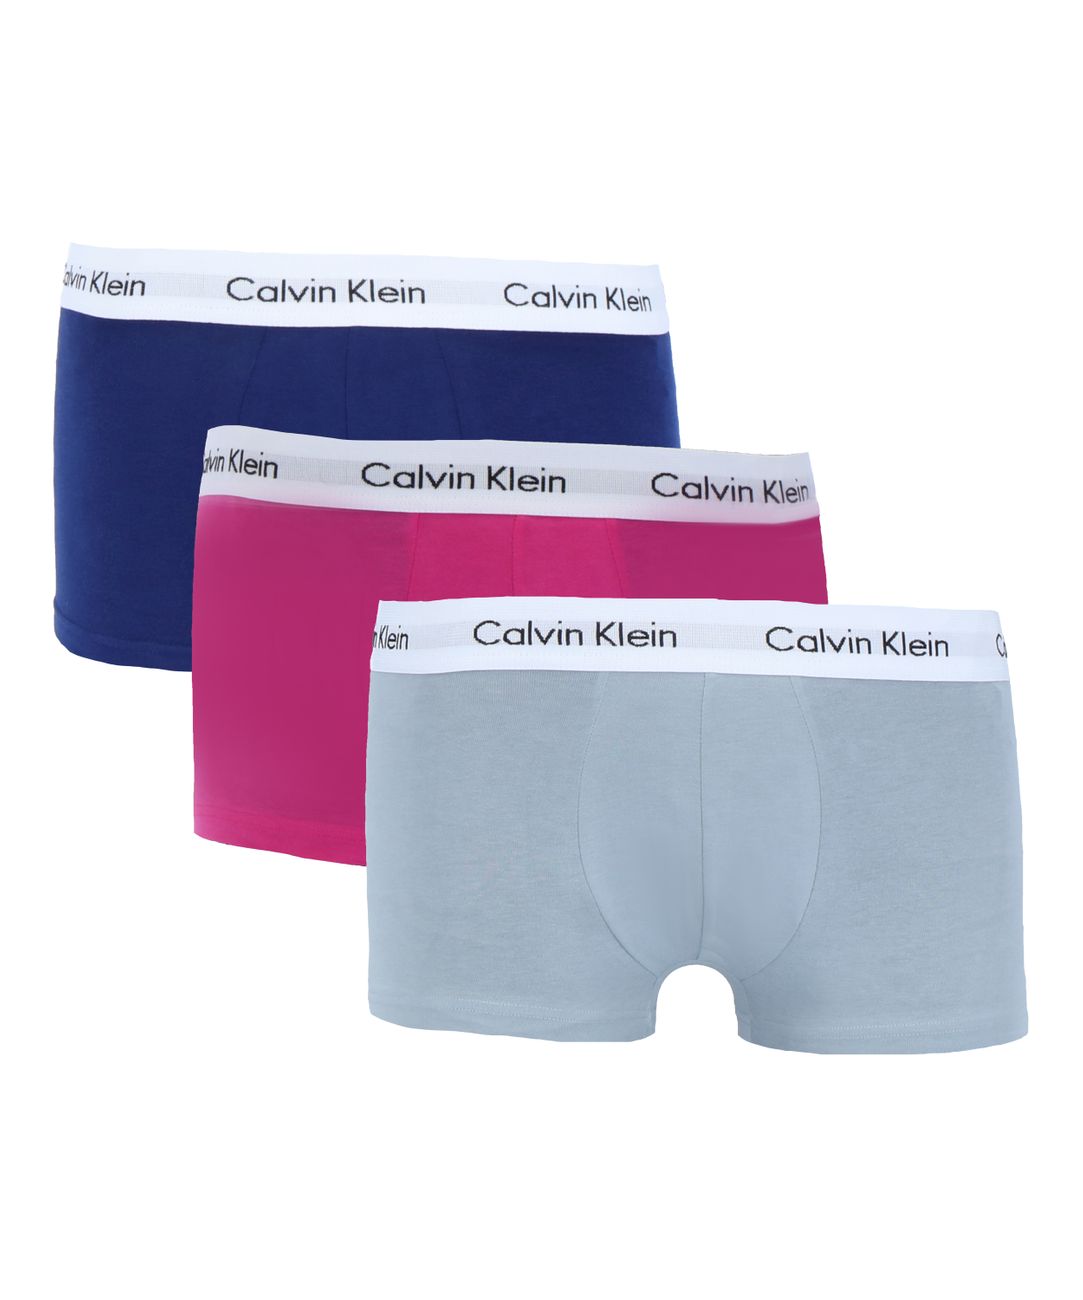 CALVIN KLEIN LOW RISE TRUNK 3er Pack Herren Boxershorts - Calvin Klein - SAGATOO - 8720107563773